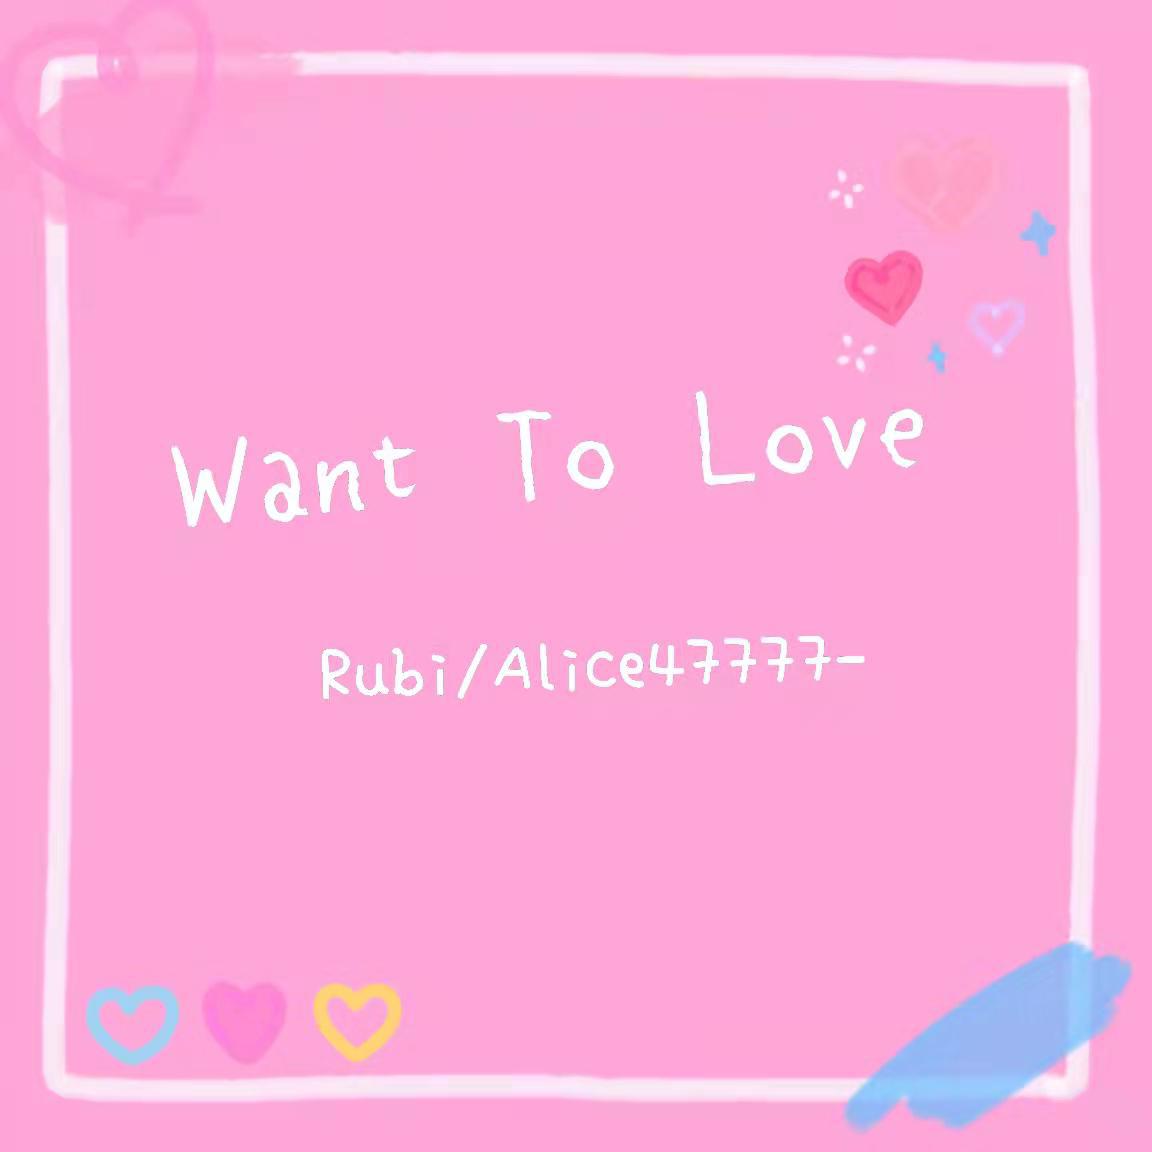 Rubi - Want to love